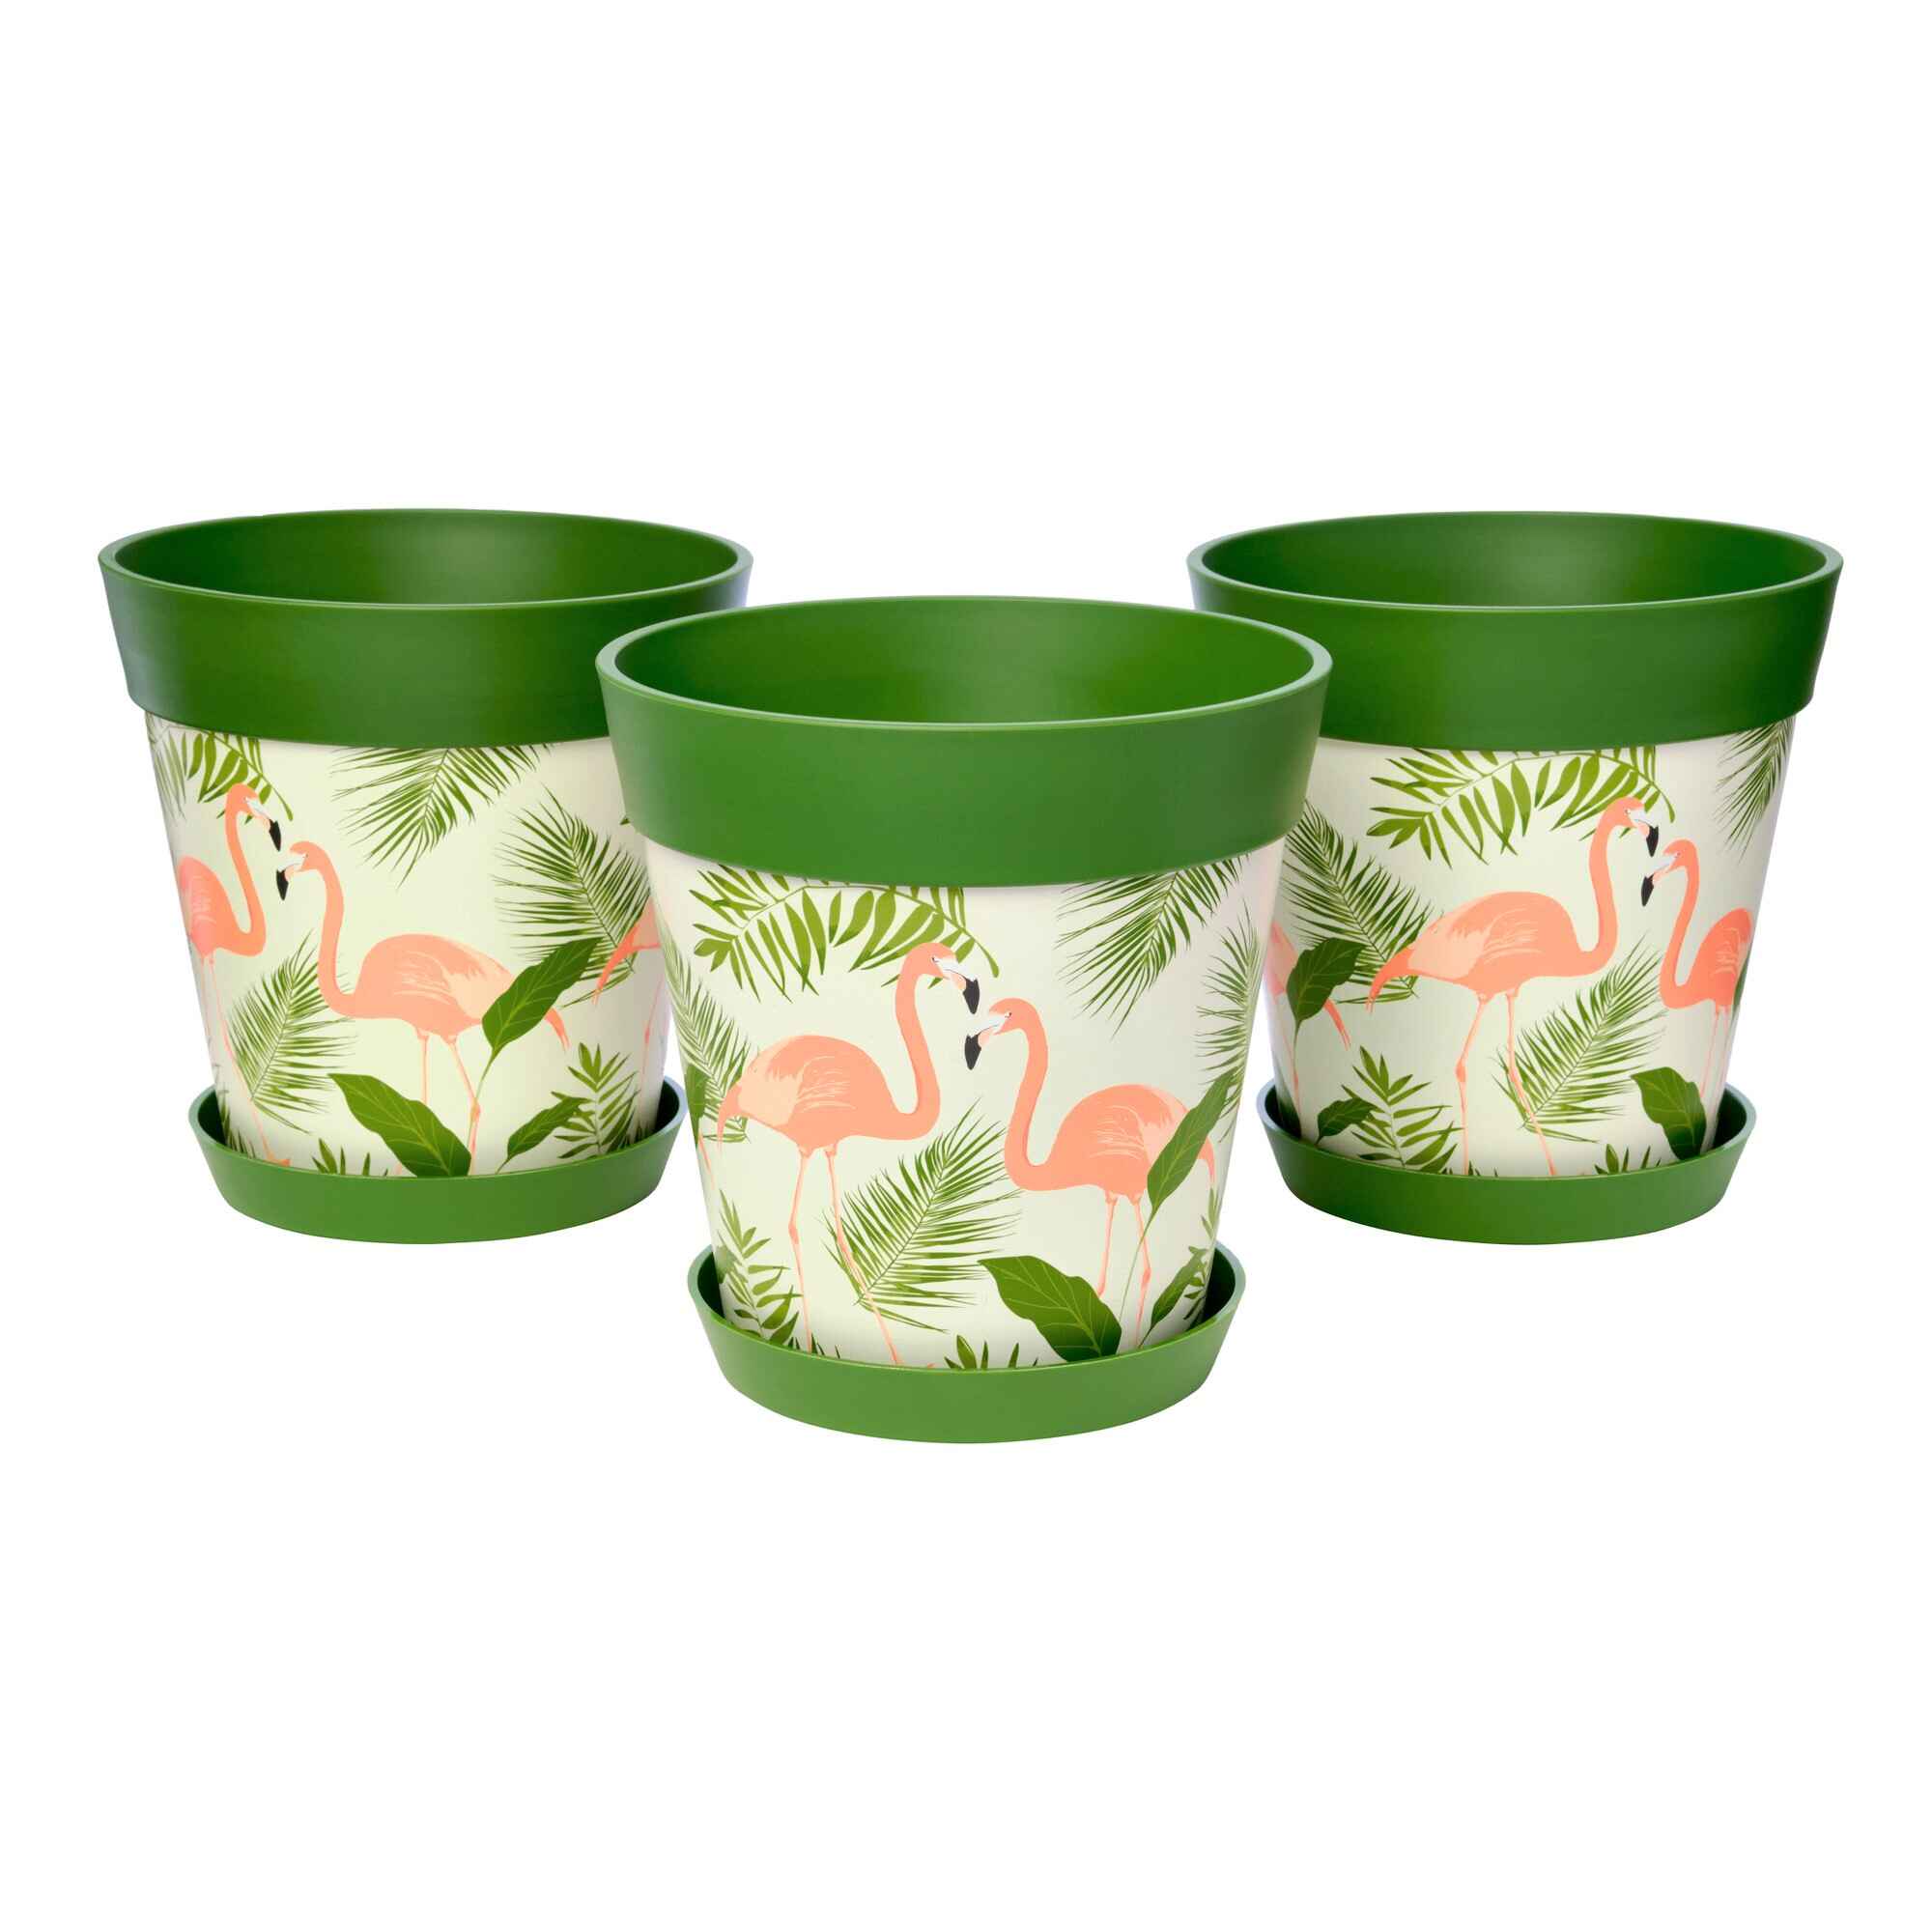 Picture of 3 Medium 22cm Green Flamingo Pattern Indoor/Outdoor Flower Pot and Saucers 